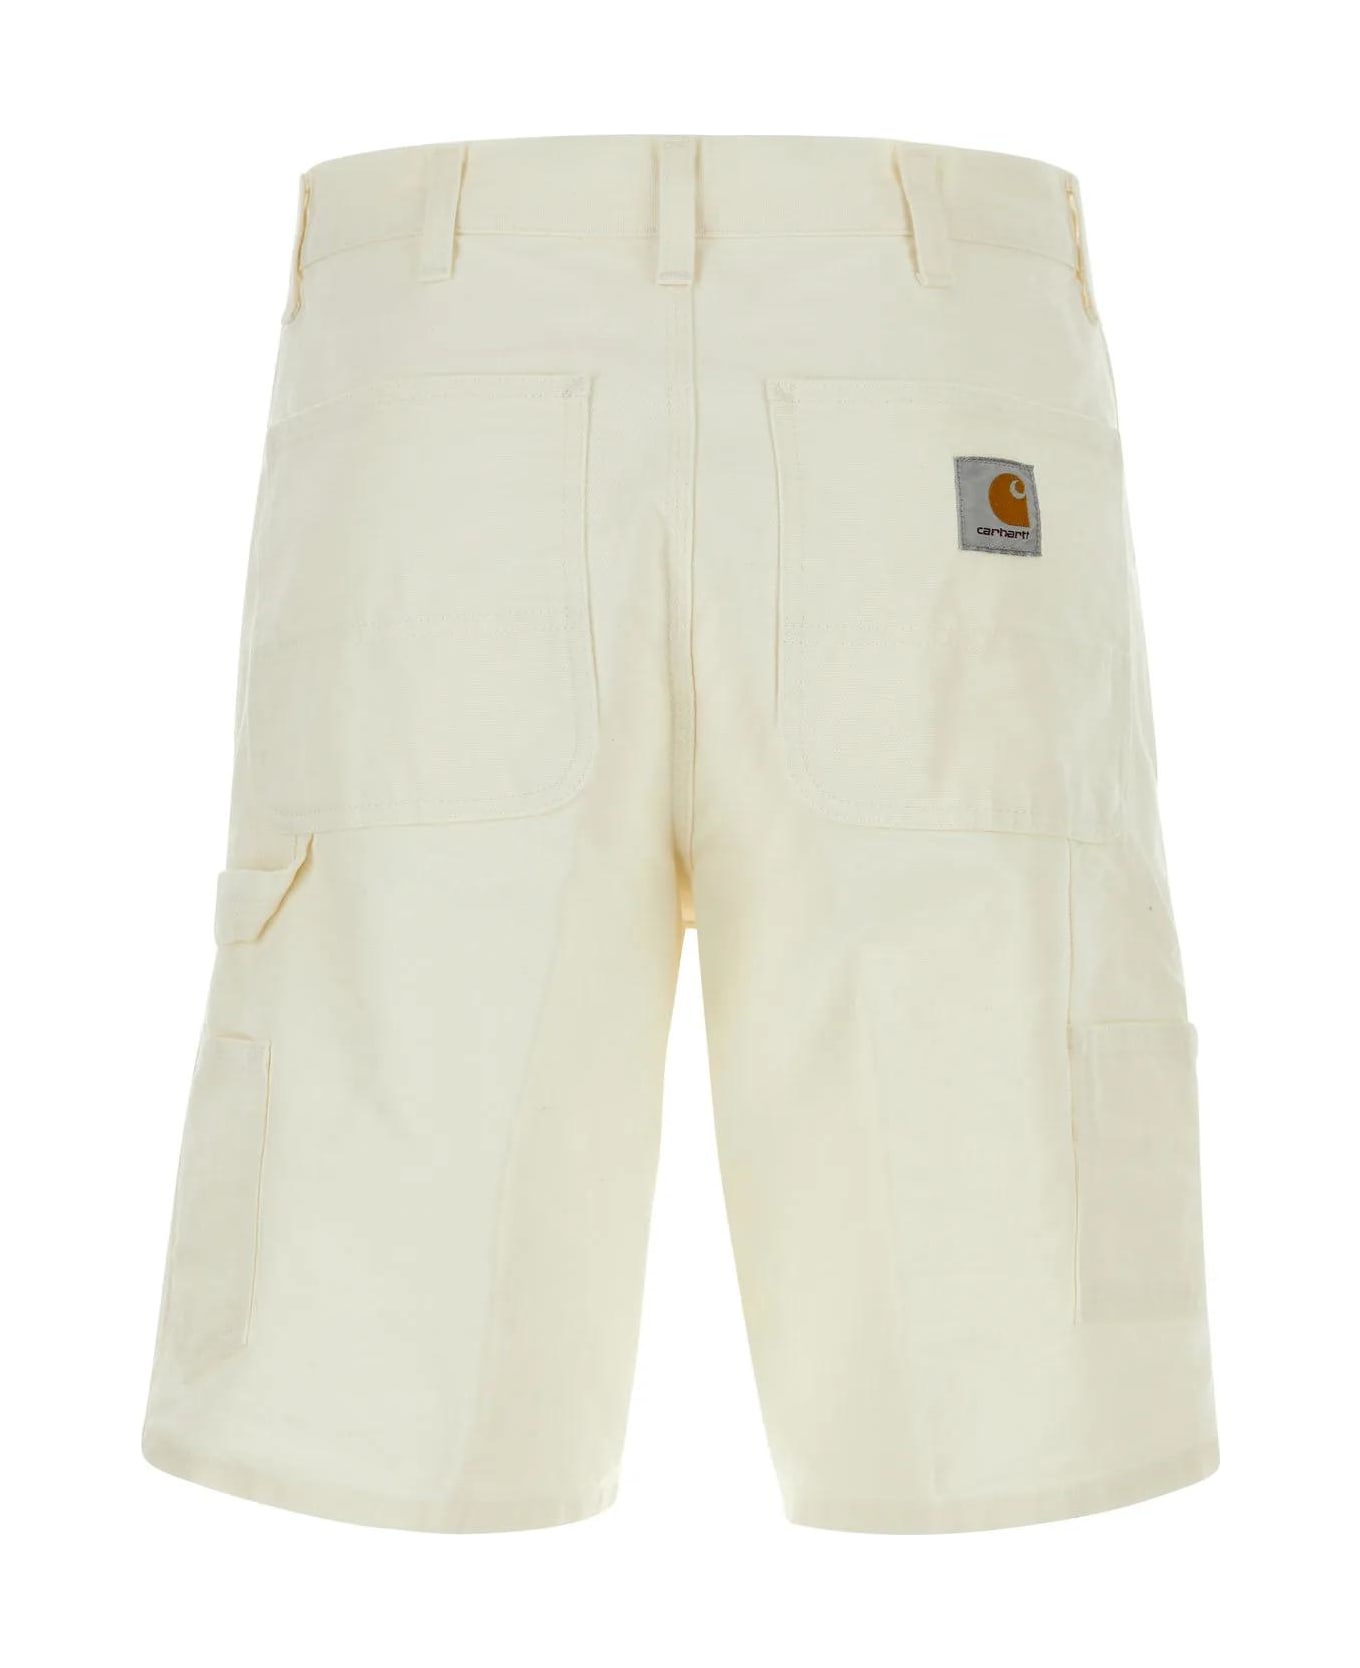 Carhartt White Cotton Single Knee Short - WHITE